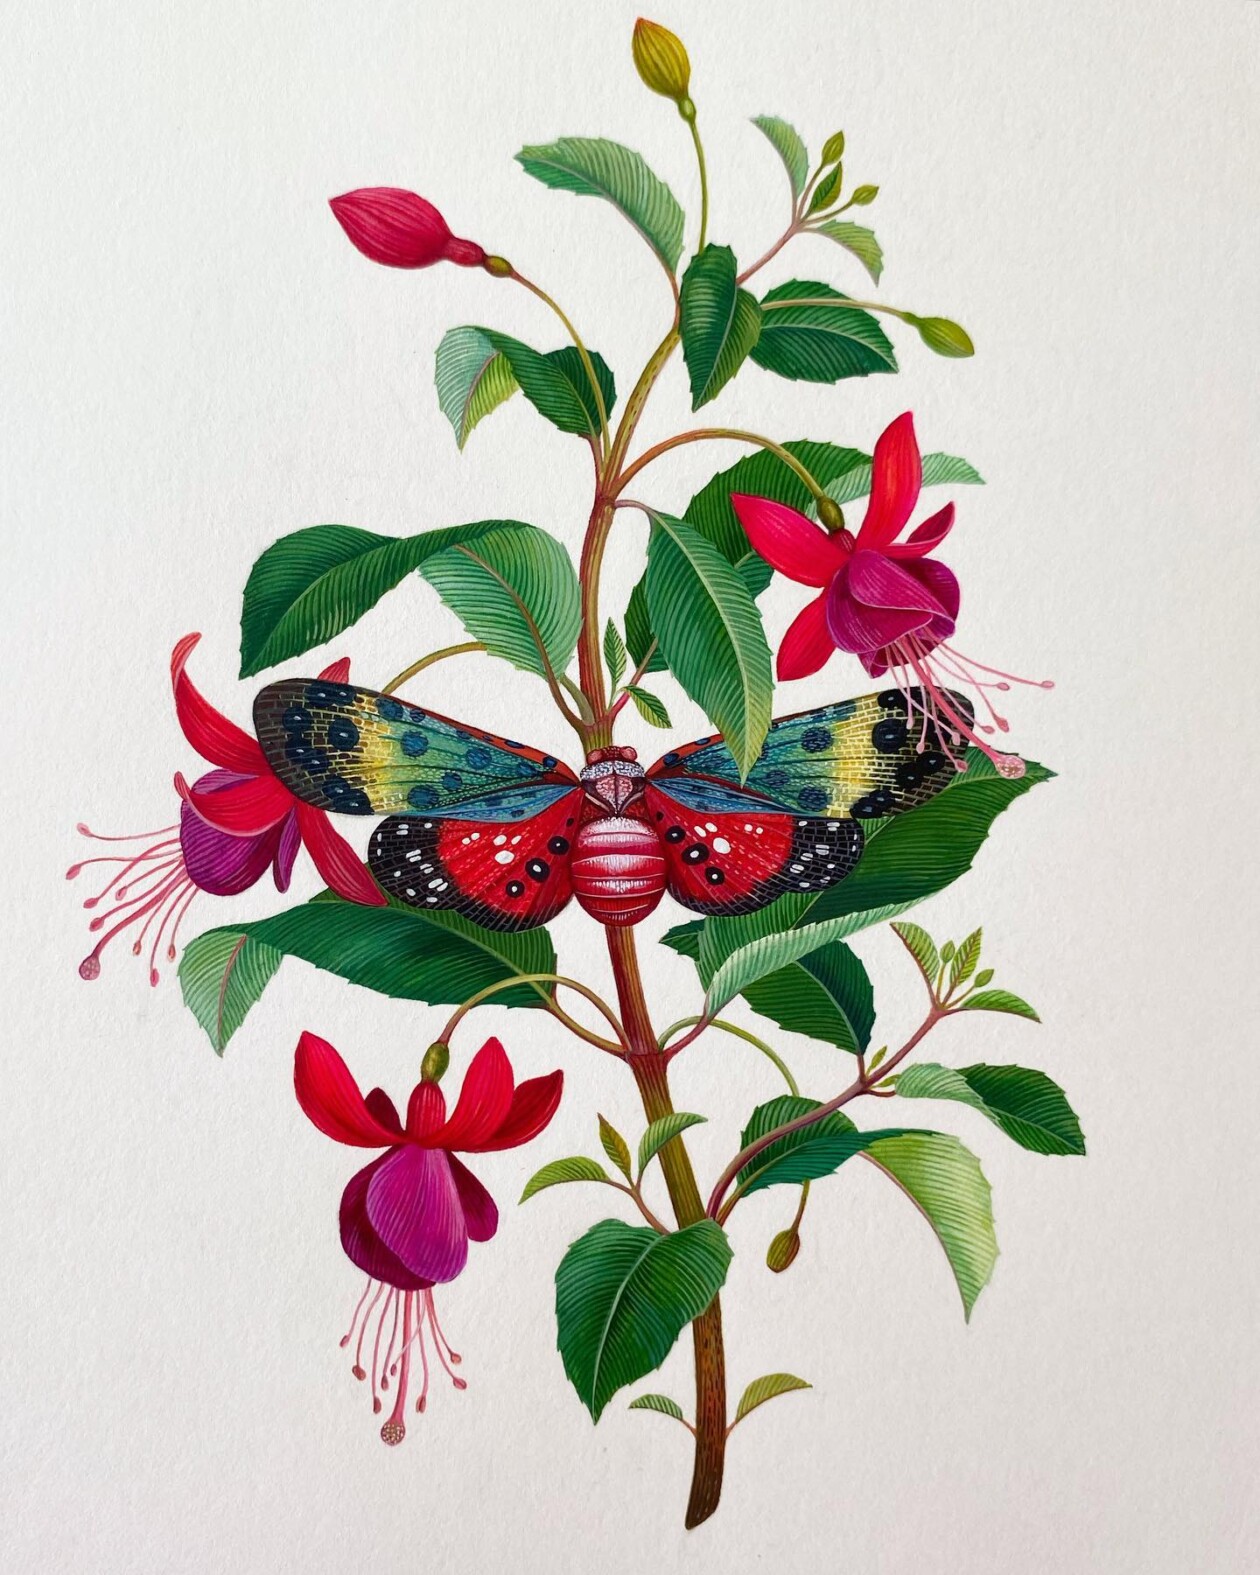 Fascinating Naturalistic Illustrations By Georgina Taylor (8)